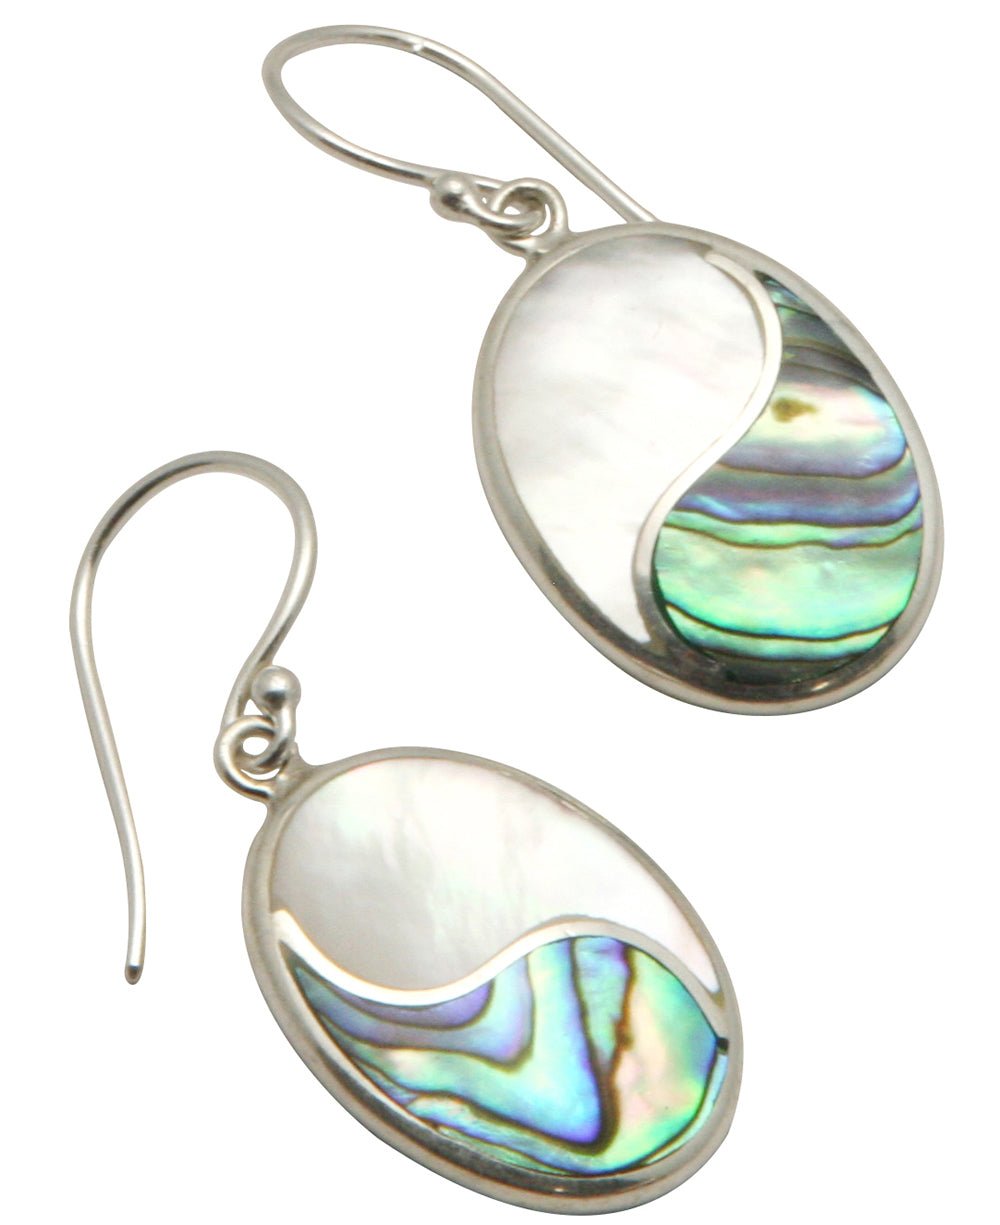 Abalone Shell Yin Yang Earrings with Mother of Pearl - Earrings